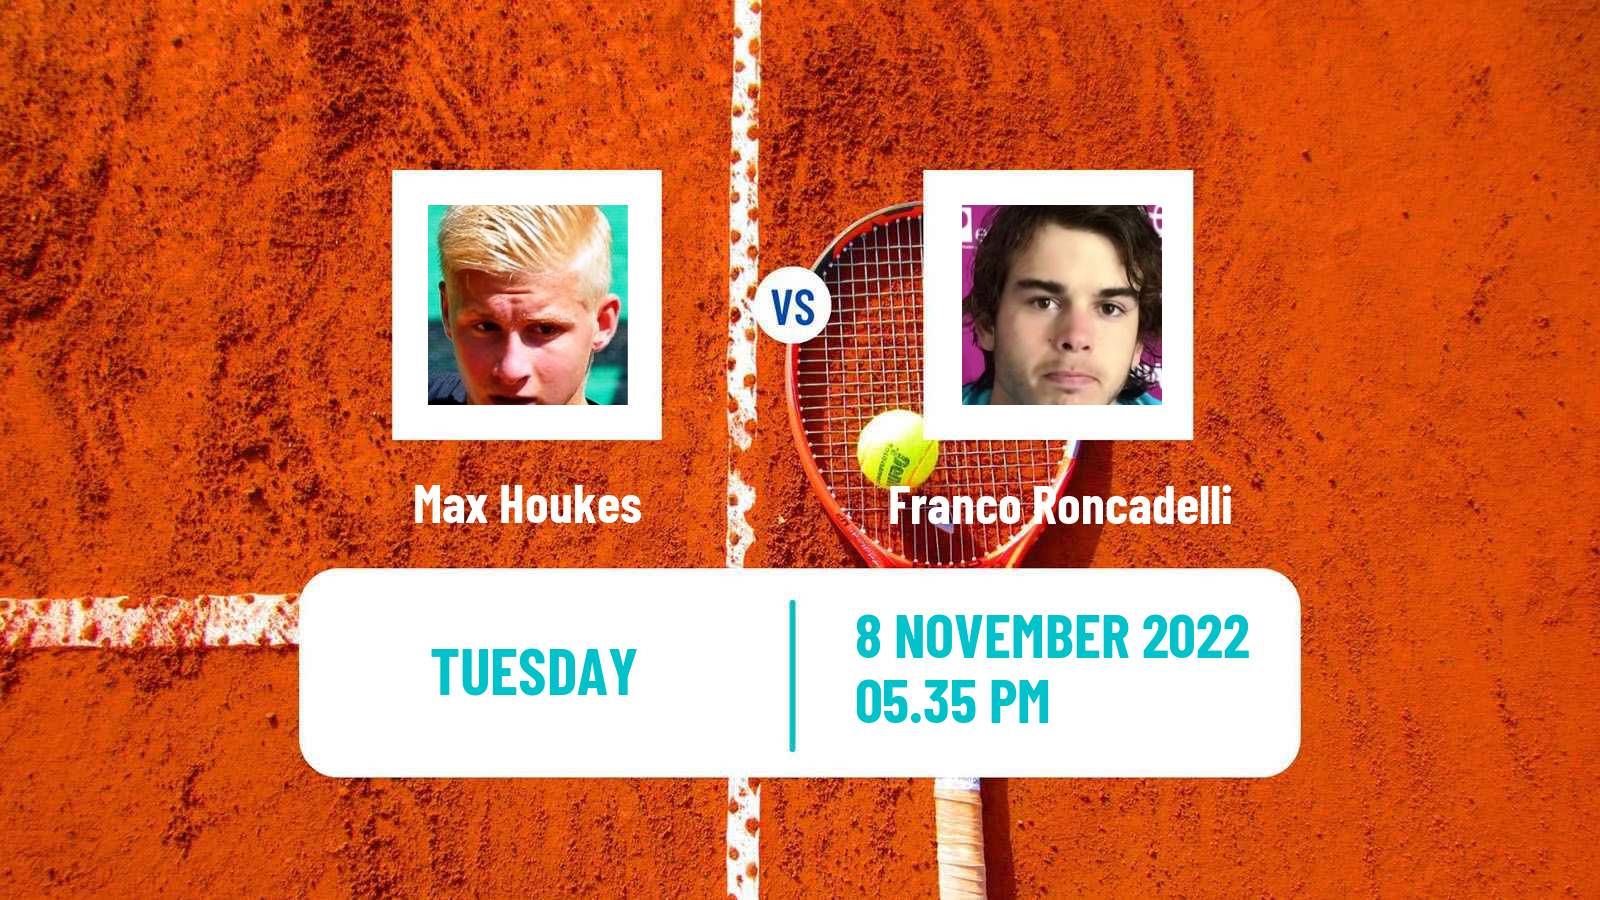 Tennis ATP Challenger Max Houkes - Franco Roncadelli